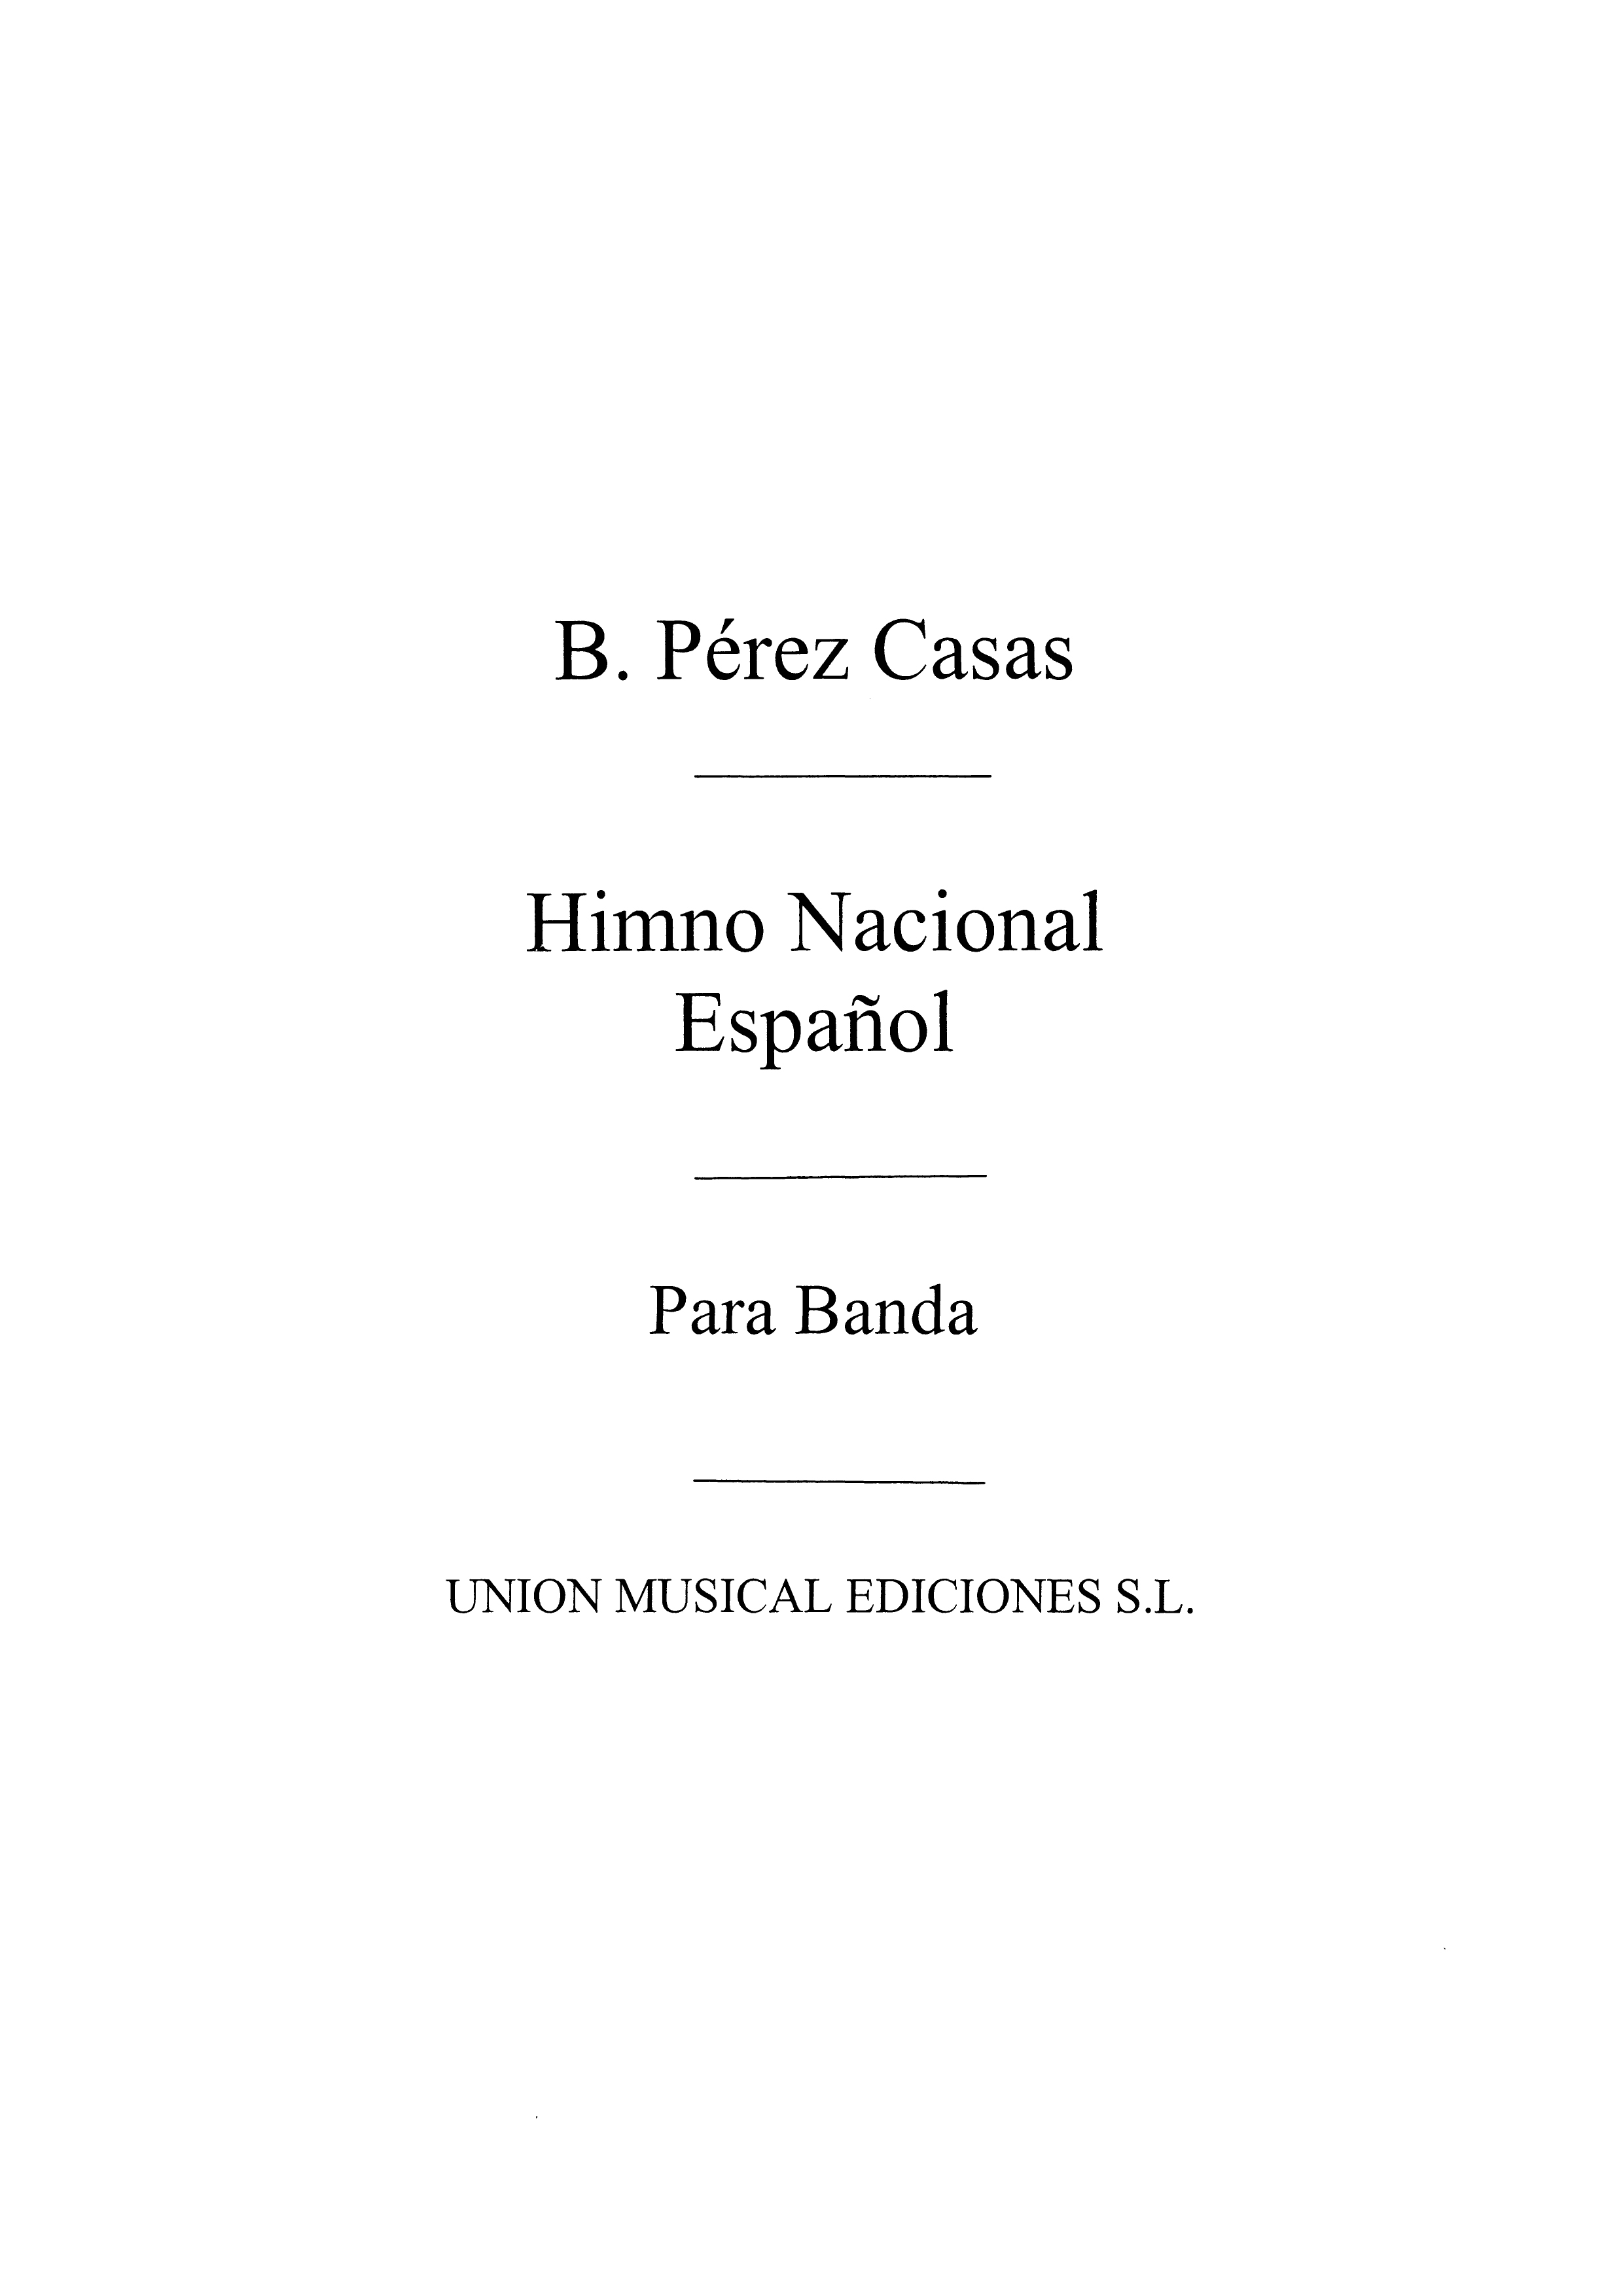 Casas: Himno Nacional Espanol